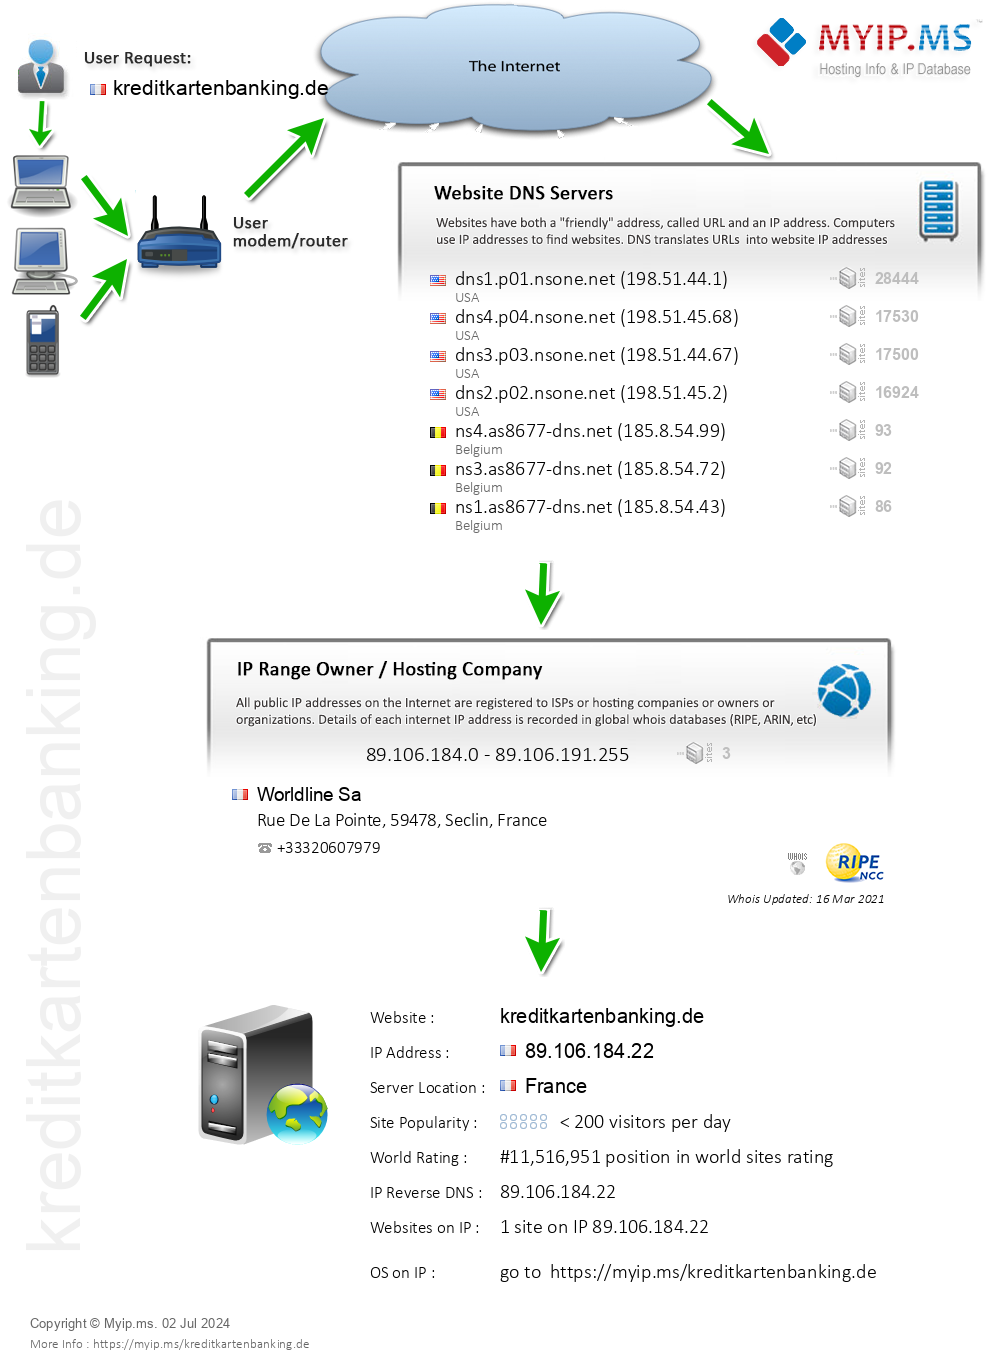 Kreditkartenbanking.de - Website Hosting Visual IP Diagram